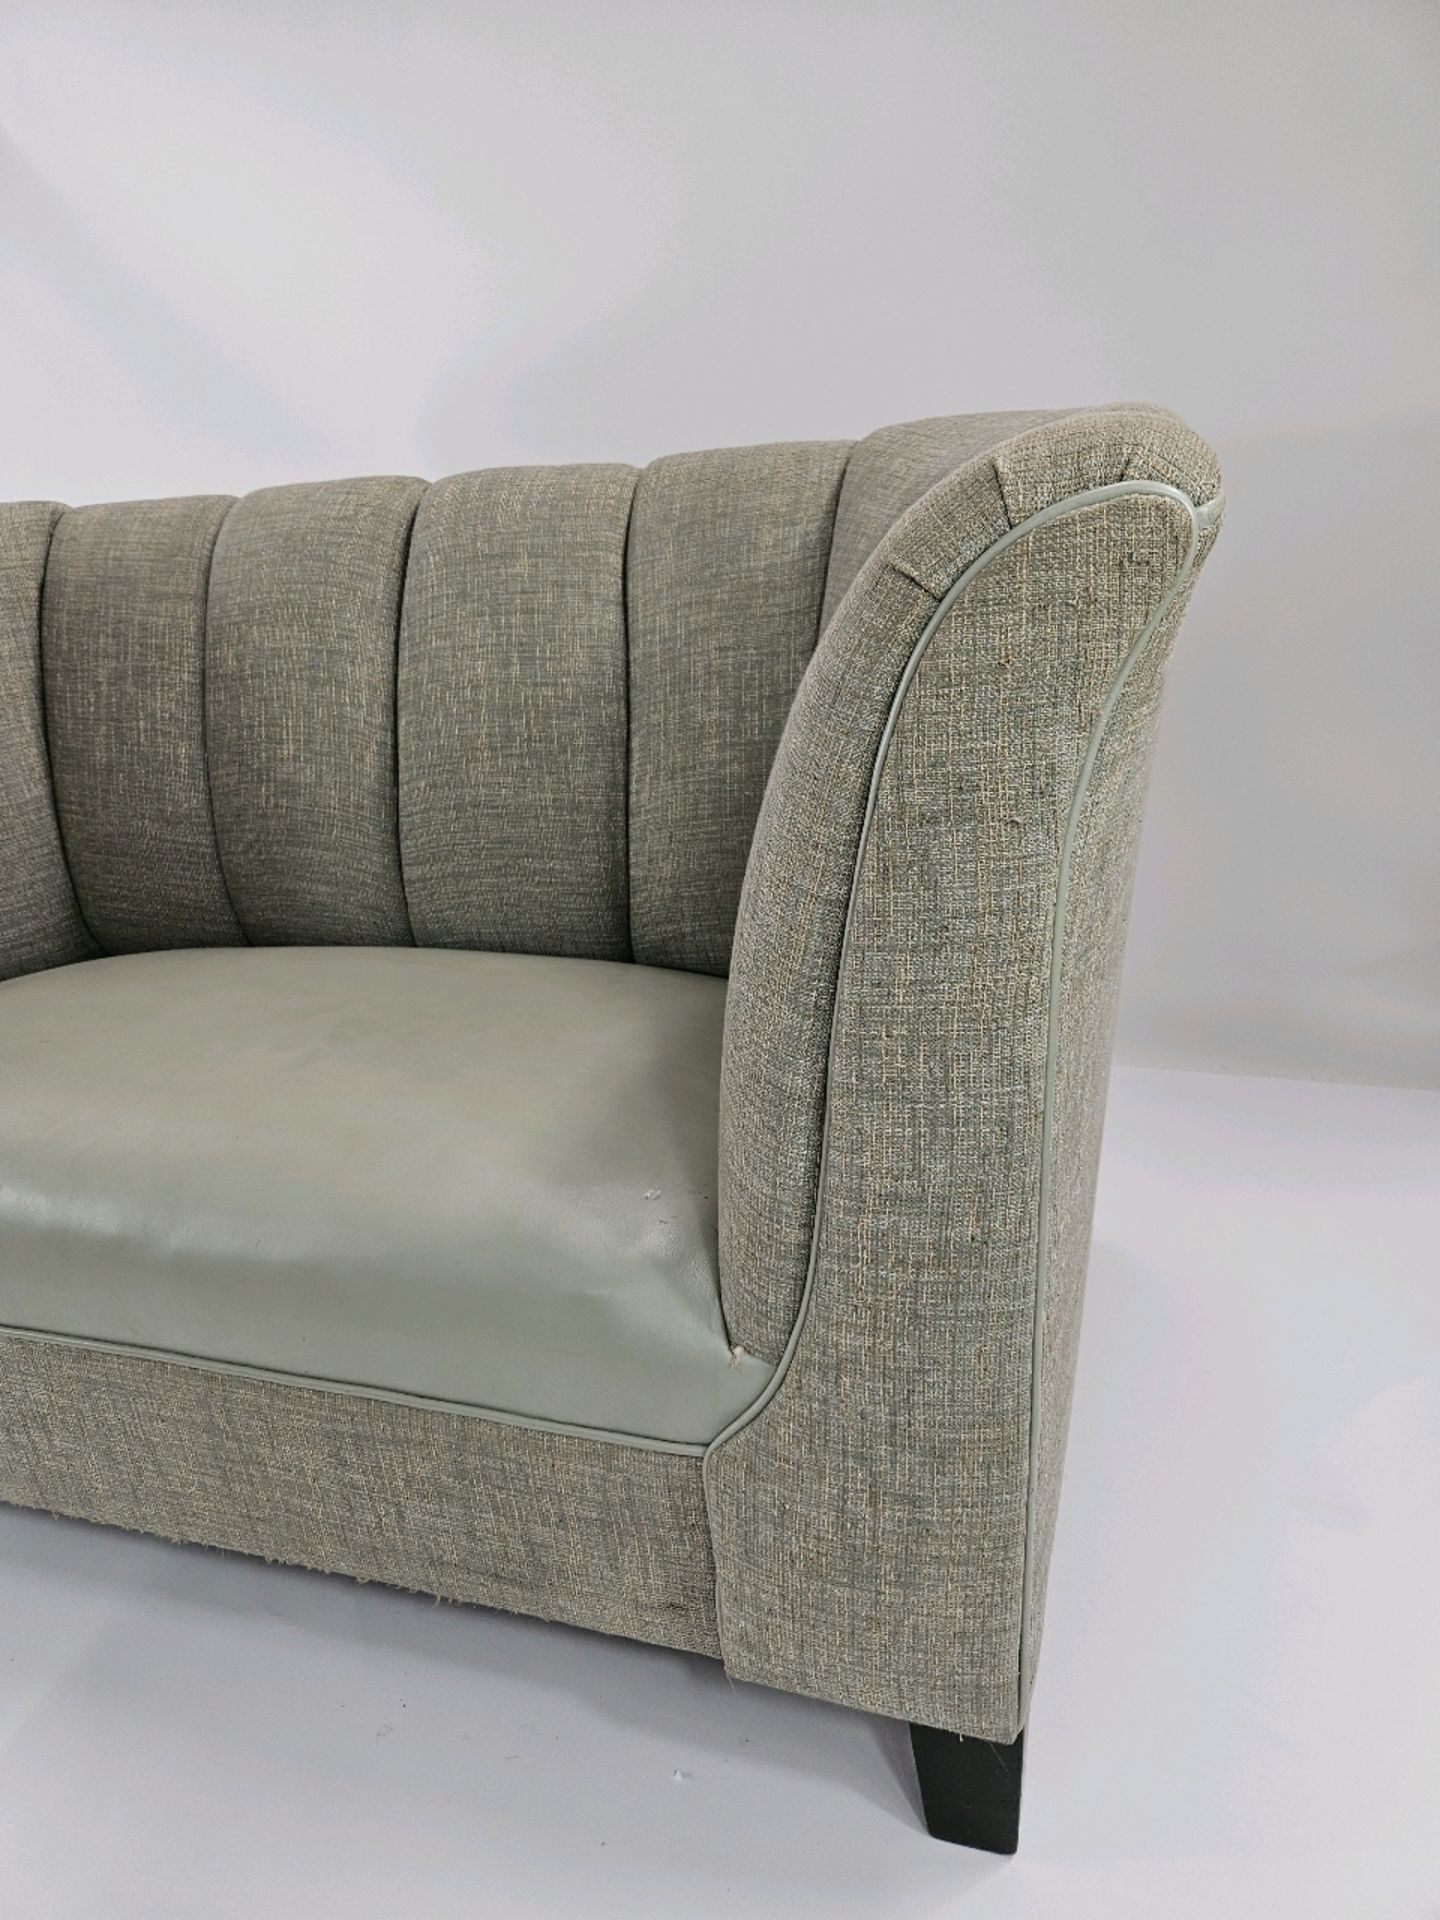 Modular Lounge Sofa - Image 2 of 2